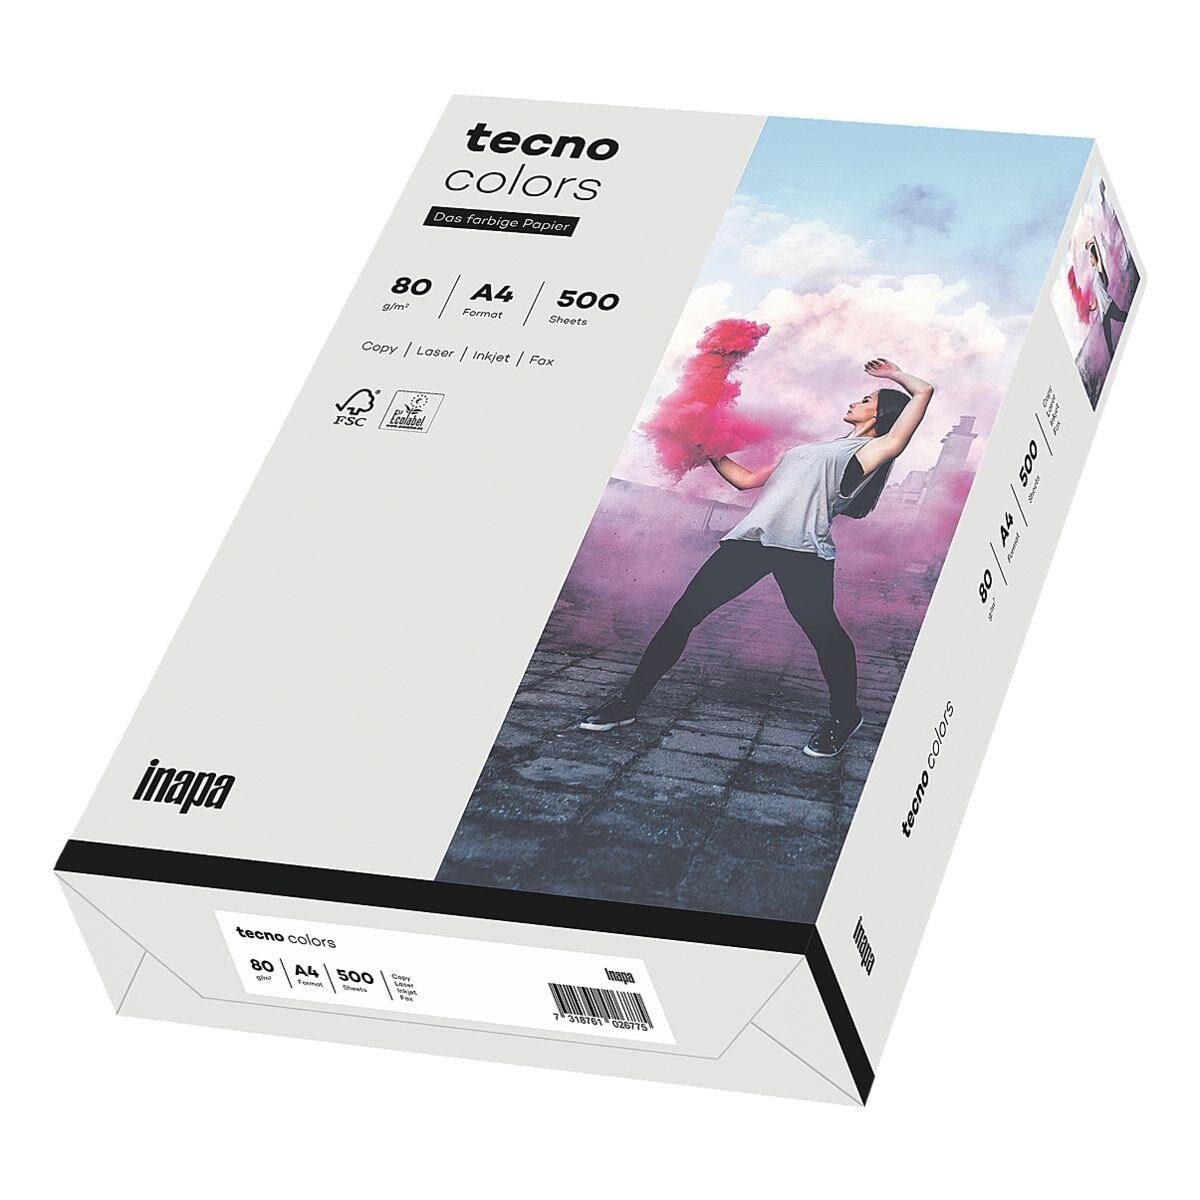 500 / Kopierpapier grau Pastellfarben, Blatt Drucker- Format tecno DIN 80 A4, g/m², Rainbow Colors, und Inapa tecno